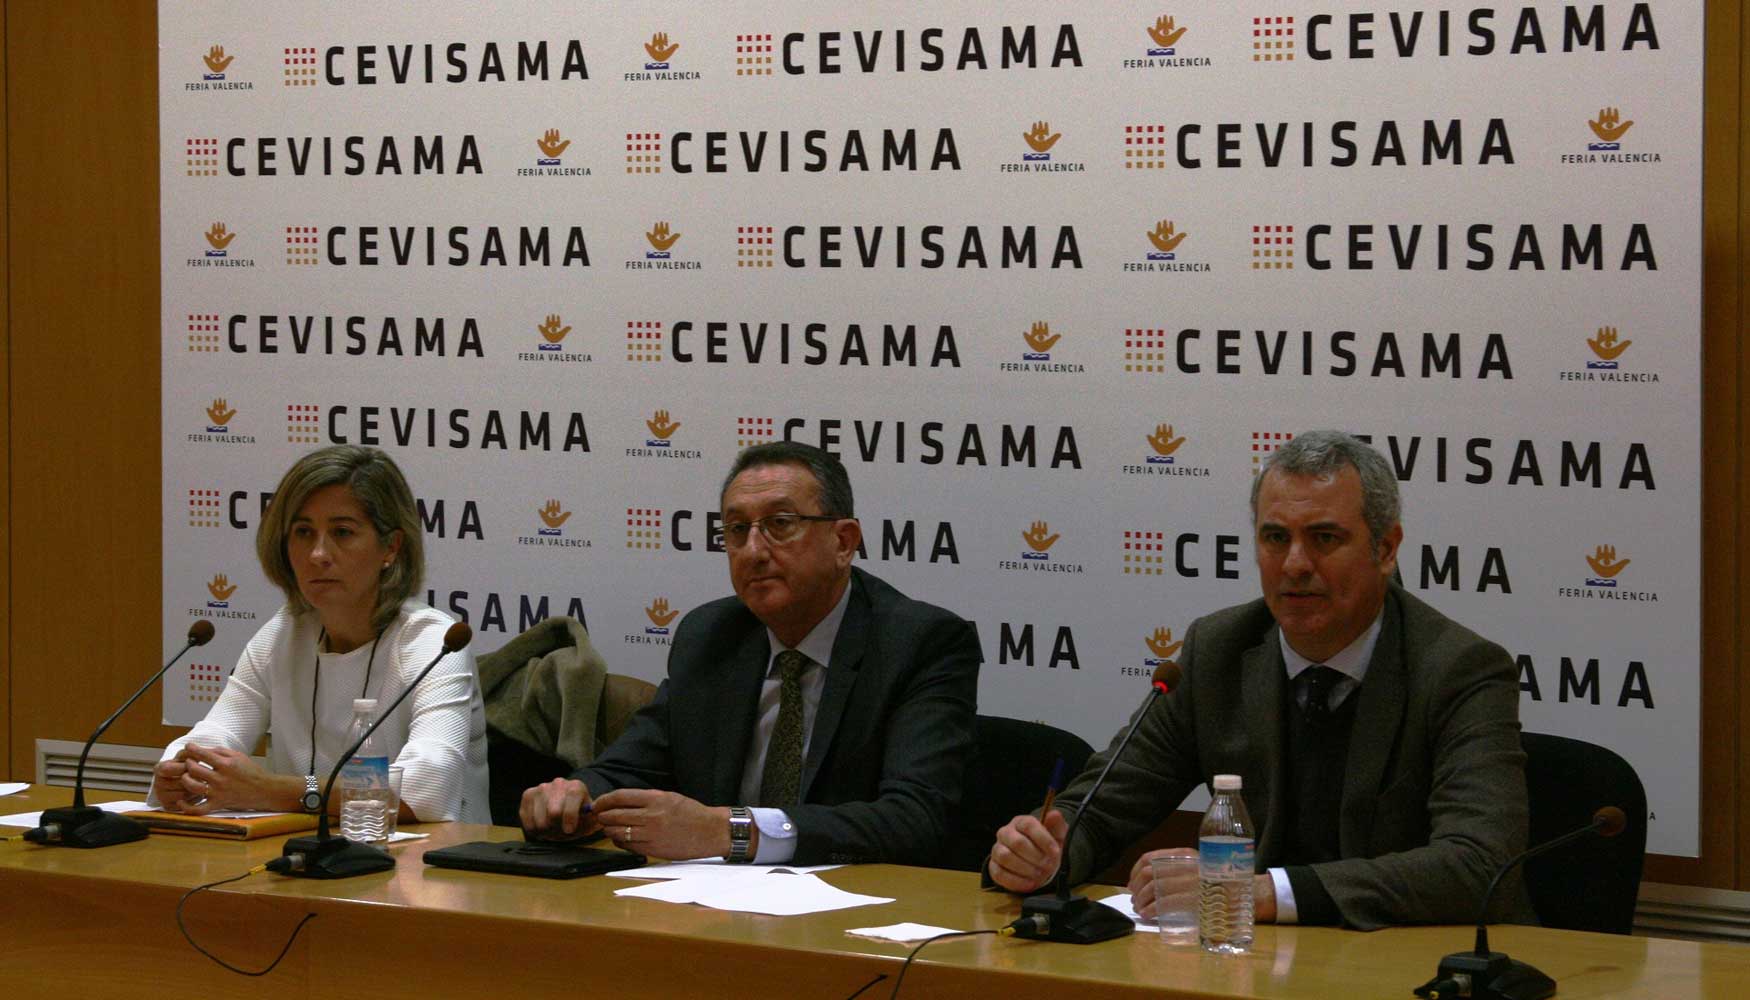 Presentacin de Cevisama 2016. De izquierda a derecha: Carmen lvarez, Manuel Rubert y Jorge Fombellida